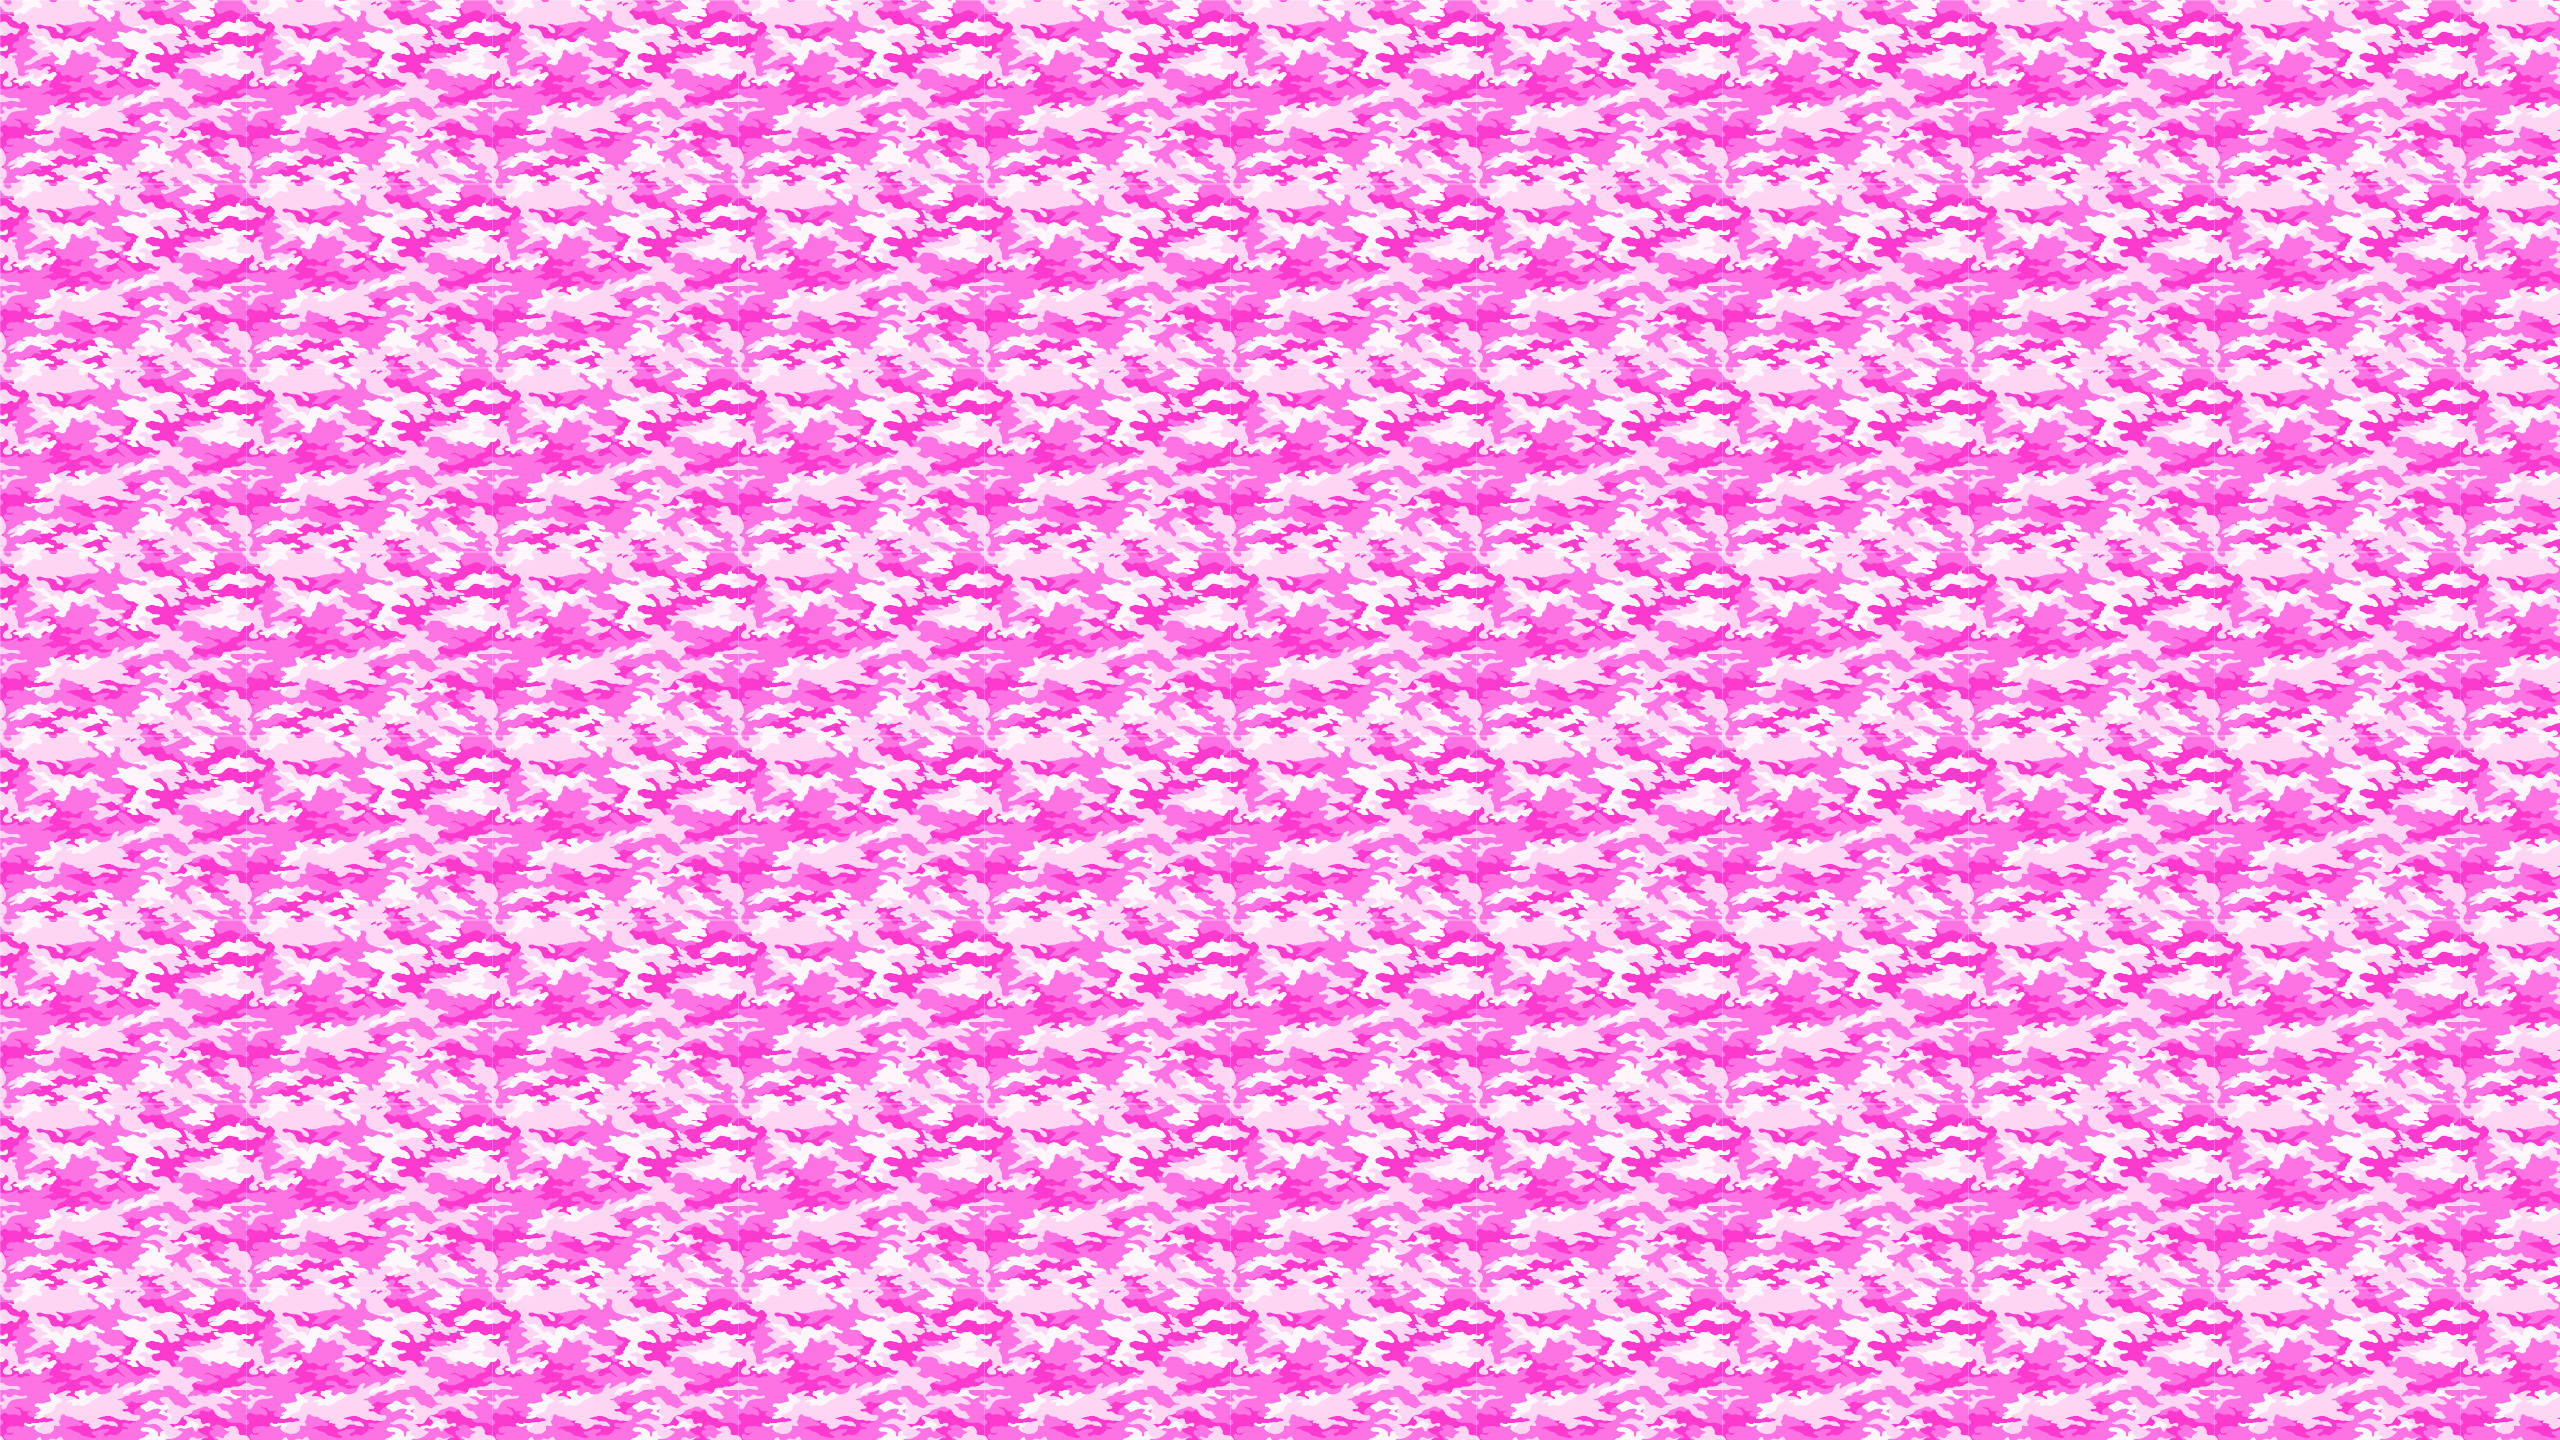 2560x1440 wallpaper.wiki-Wallpaper-pink-williams-images-sherwin-PIC-